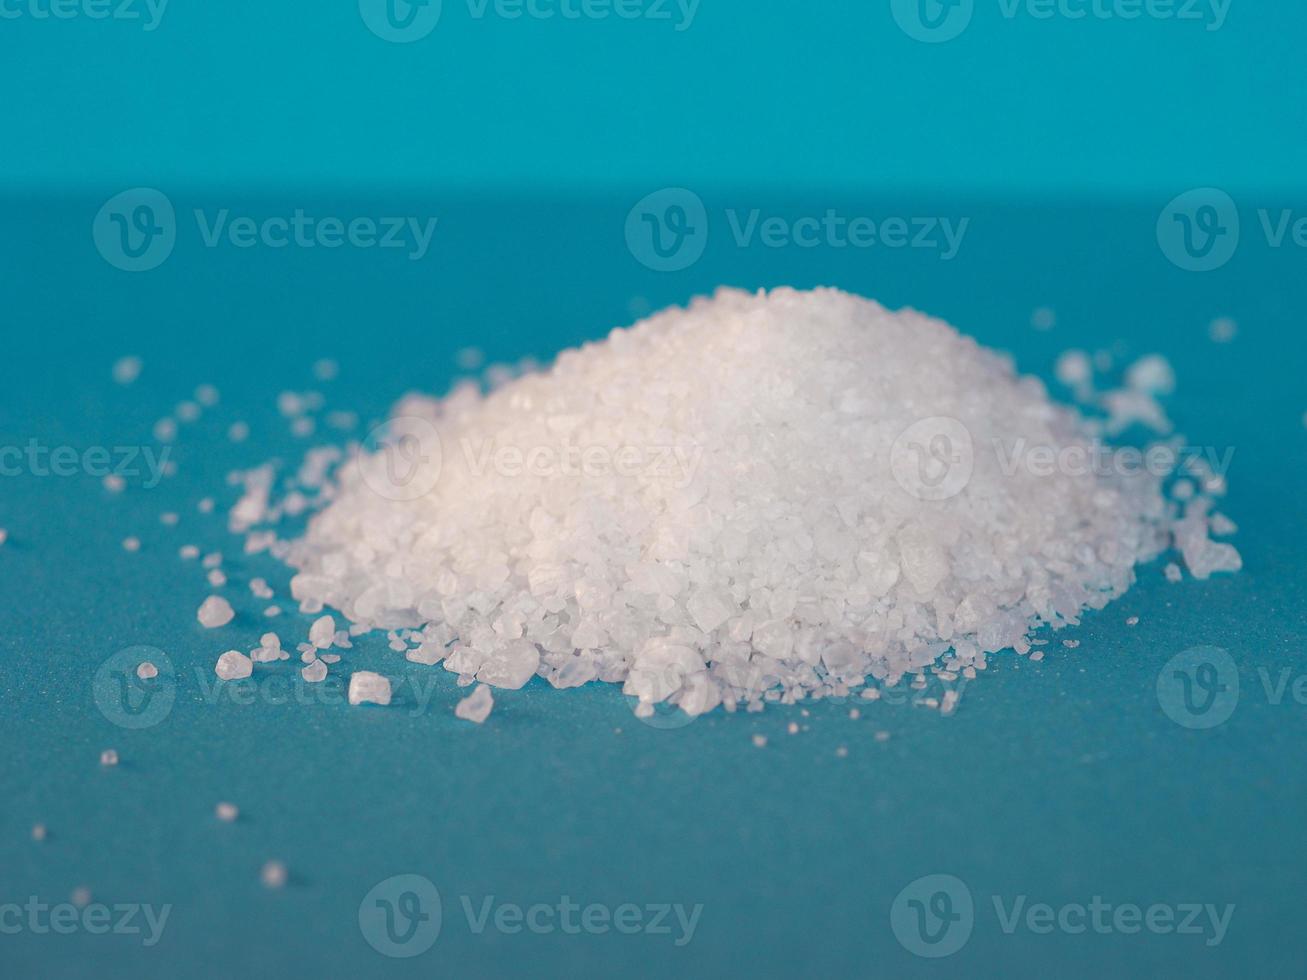 Common table salt photo